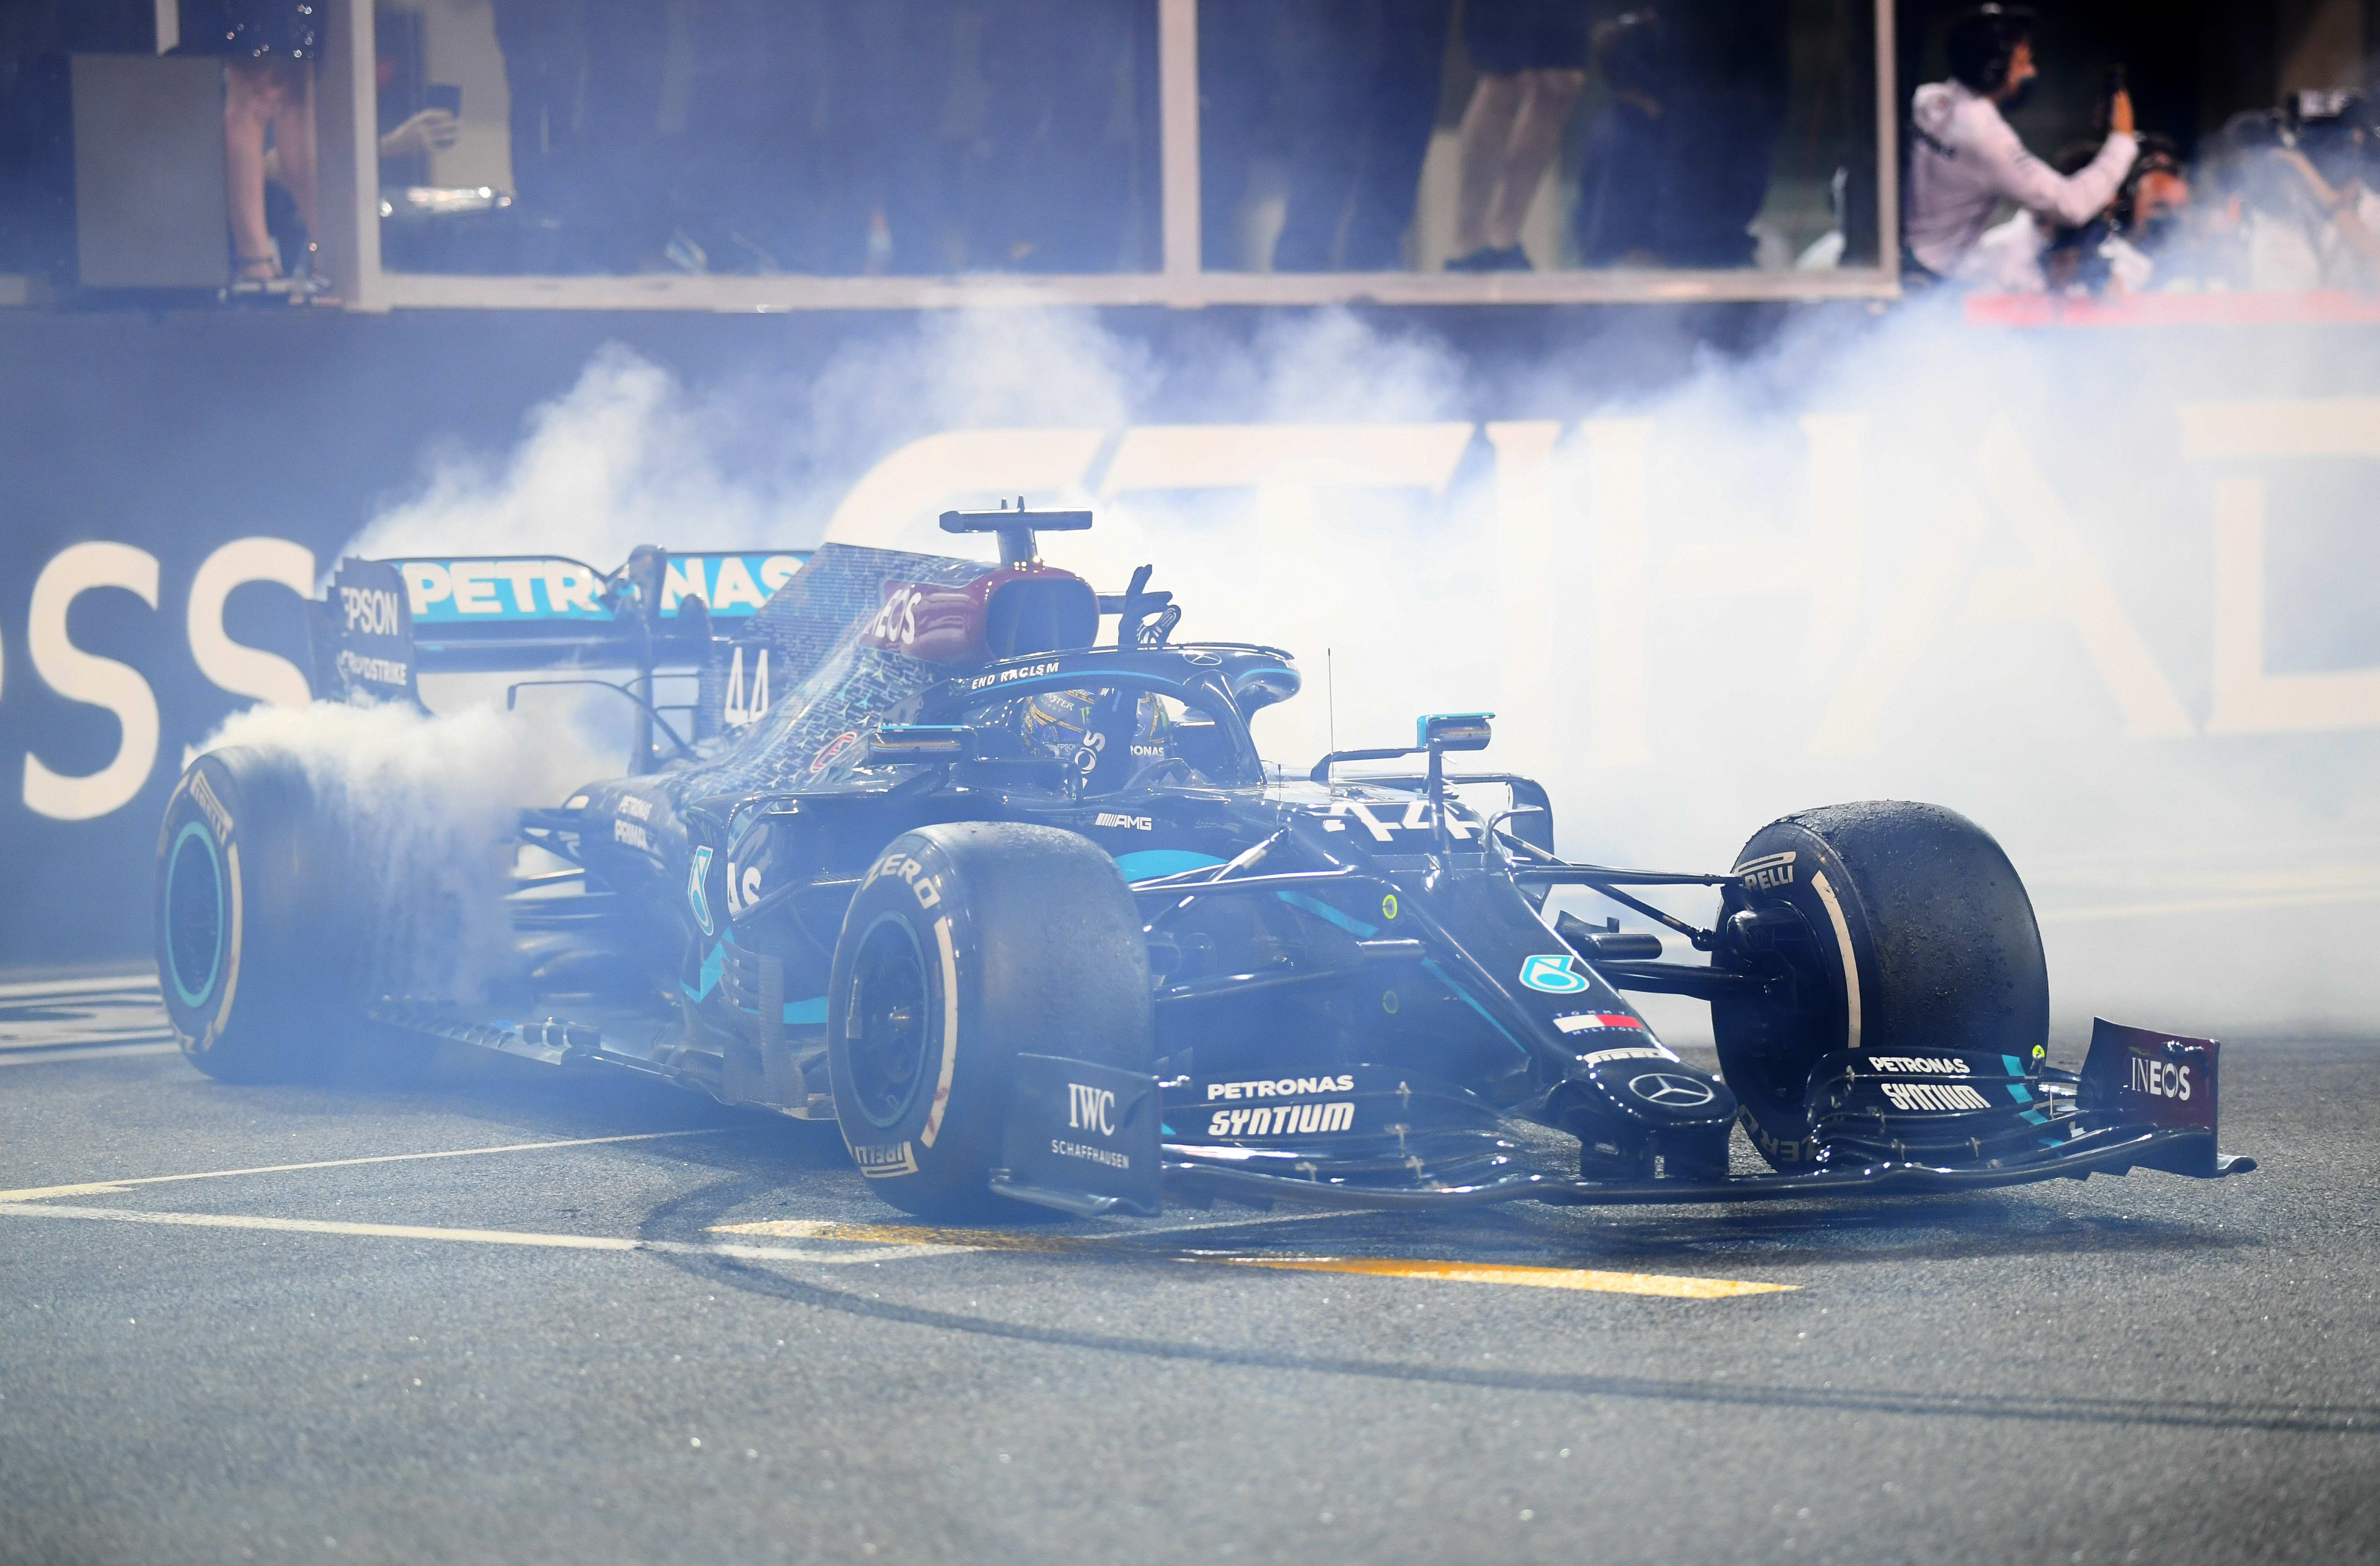 First look at Lewis Hamilton & Sergio Perez Pop Rides! . Repost